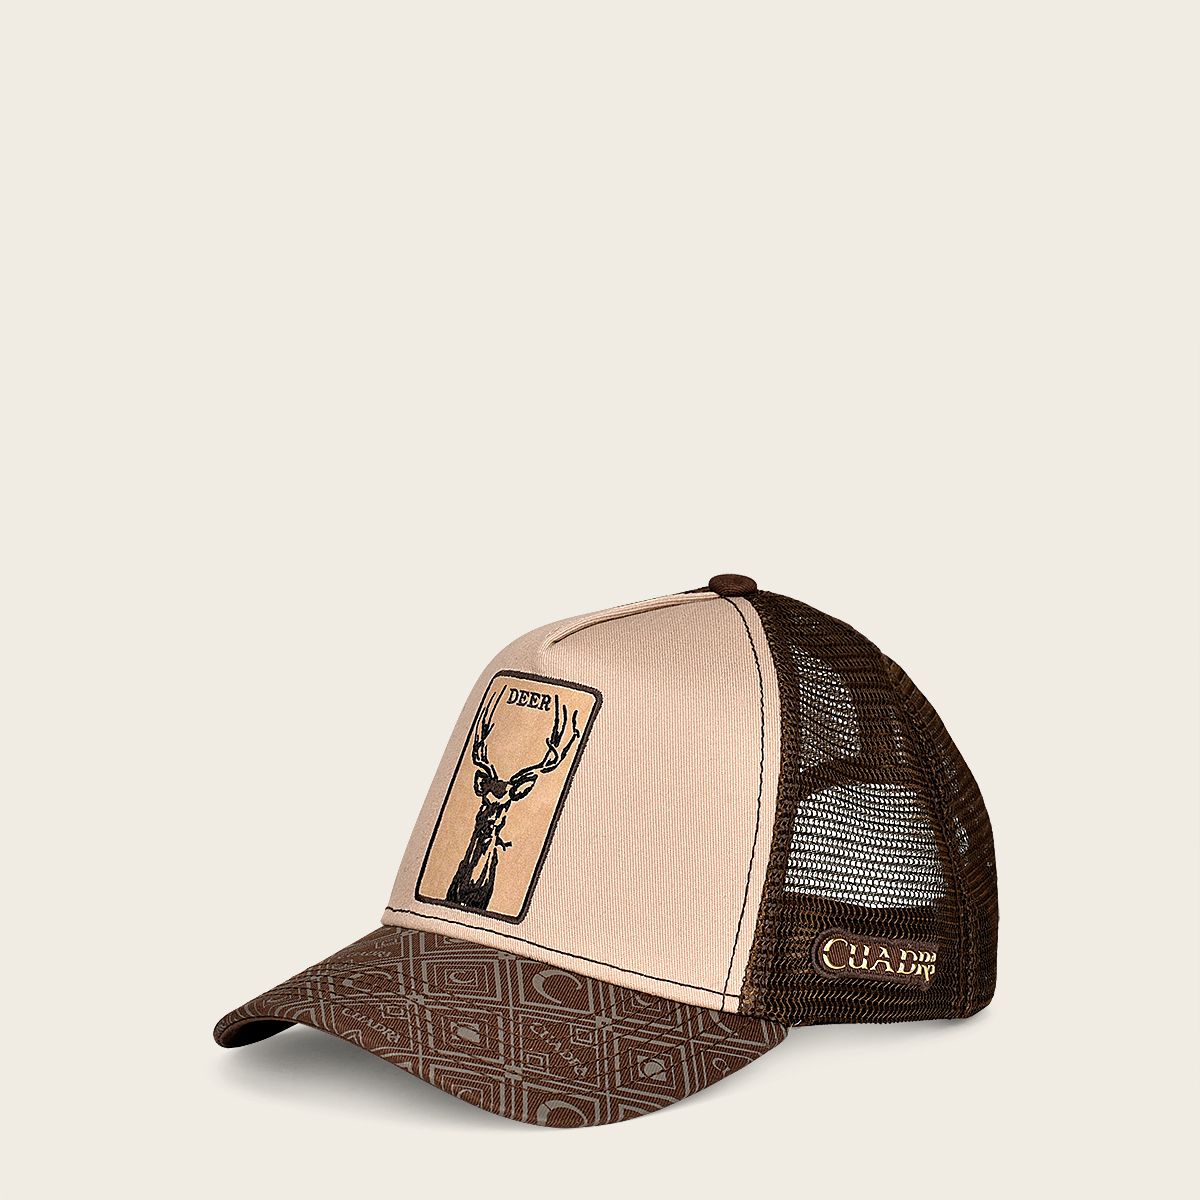 Brown snapback cap with deer patch